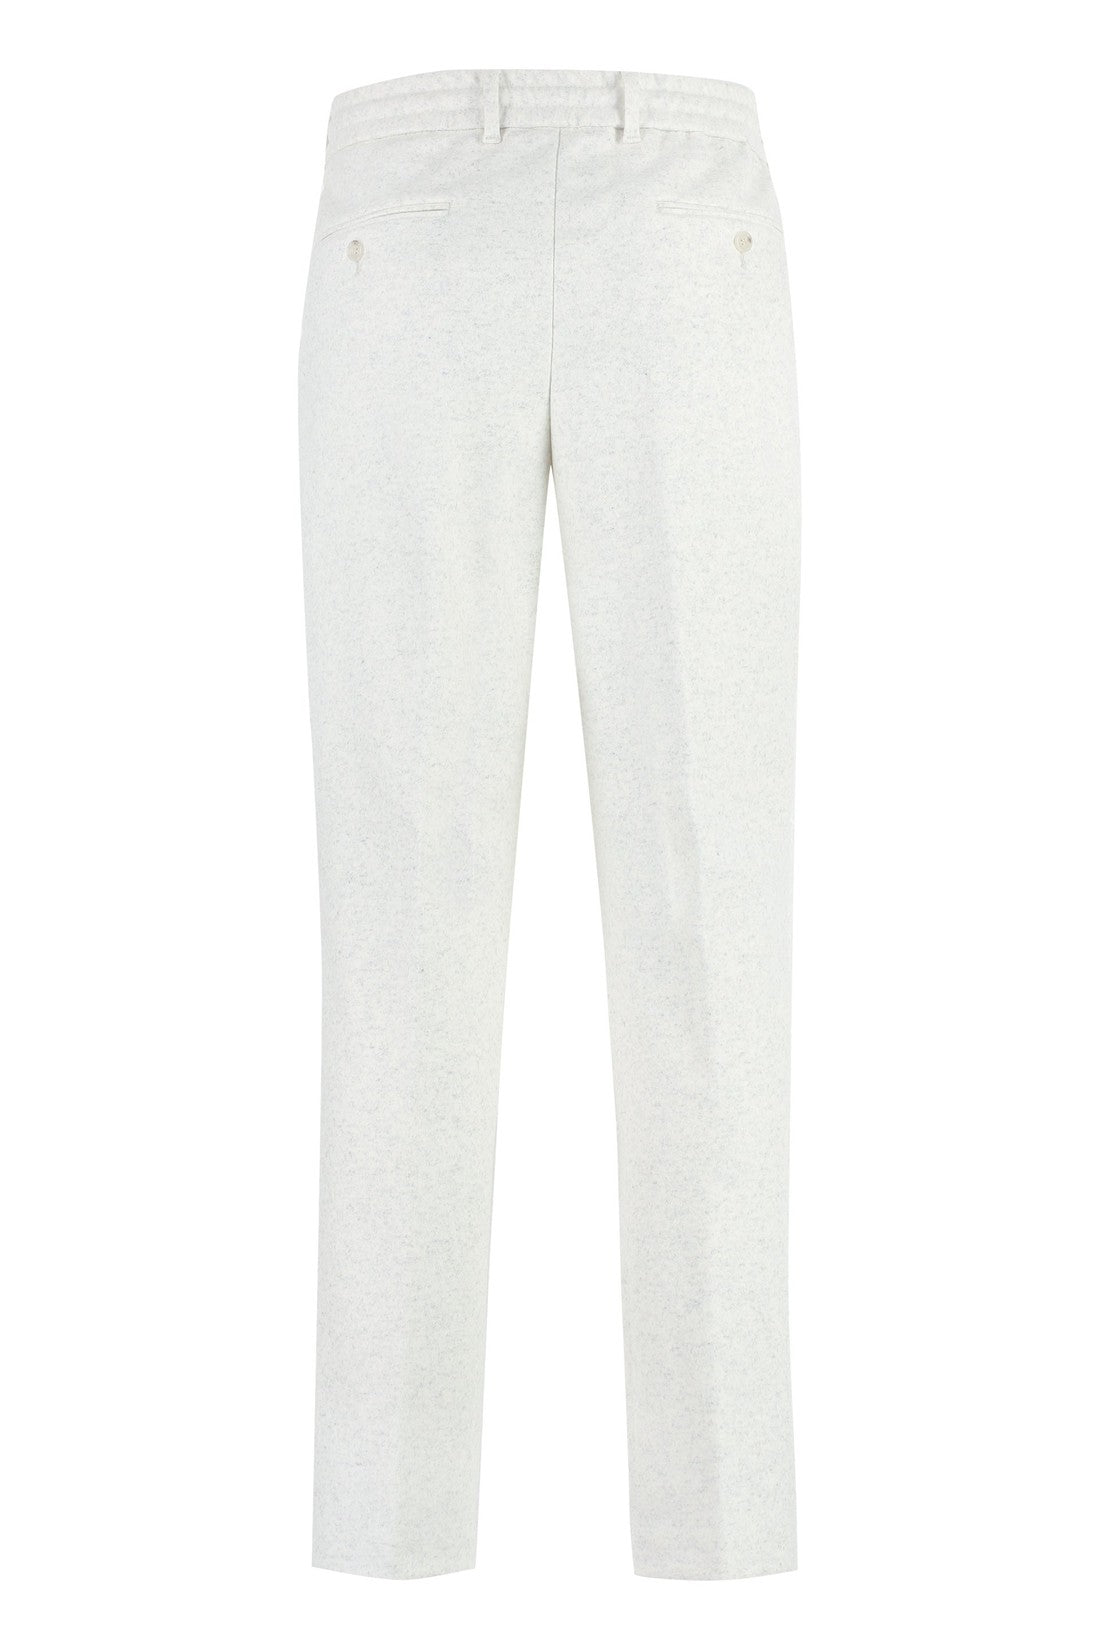 BOSS-OUTLET-SALE-Wool blend trousers-ARCHIVIST